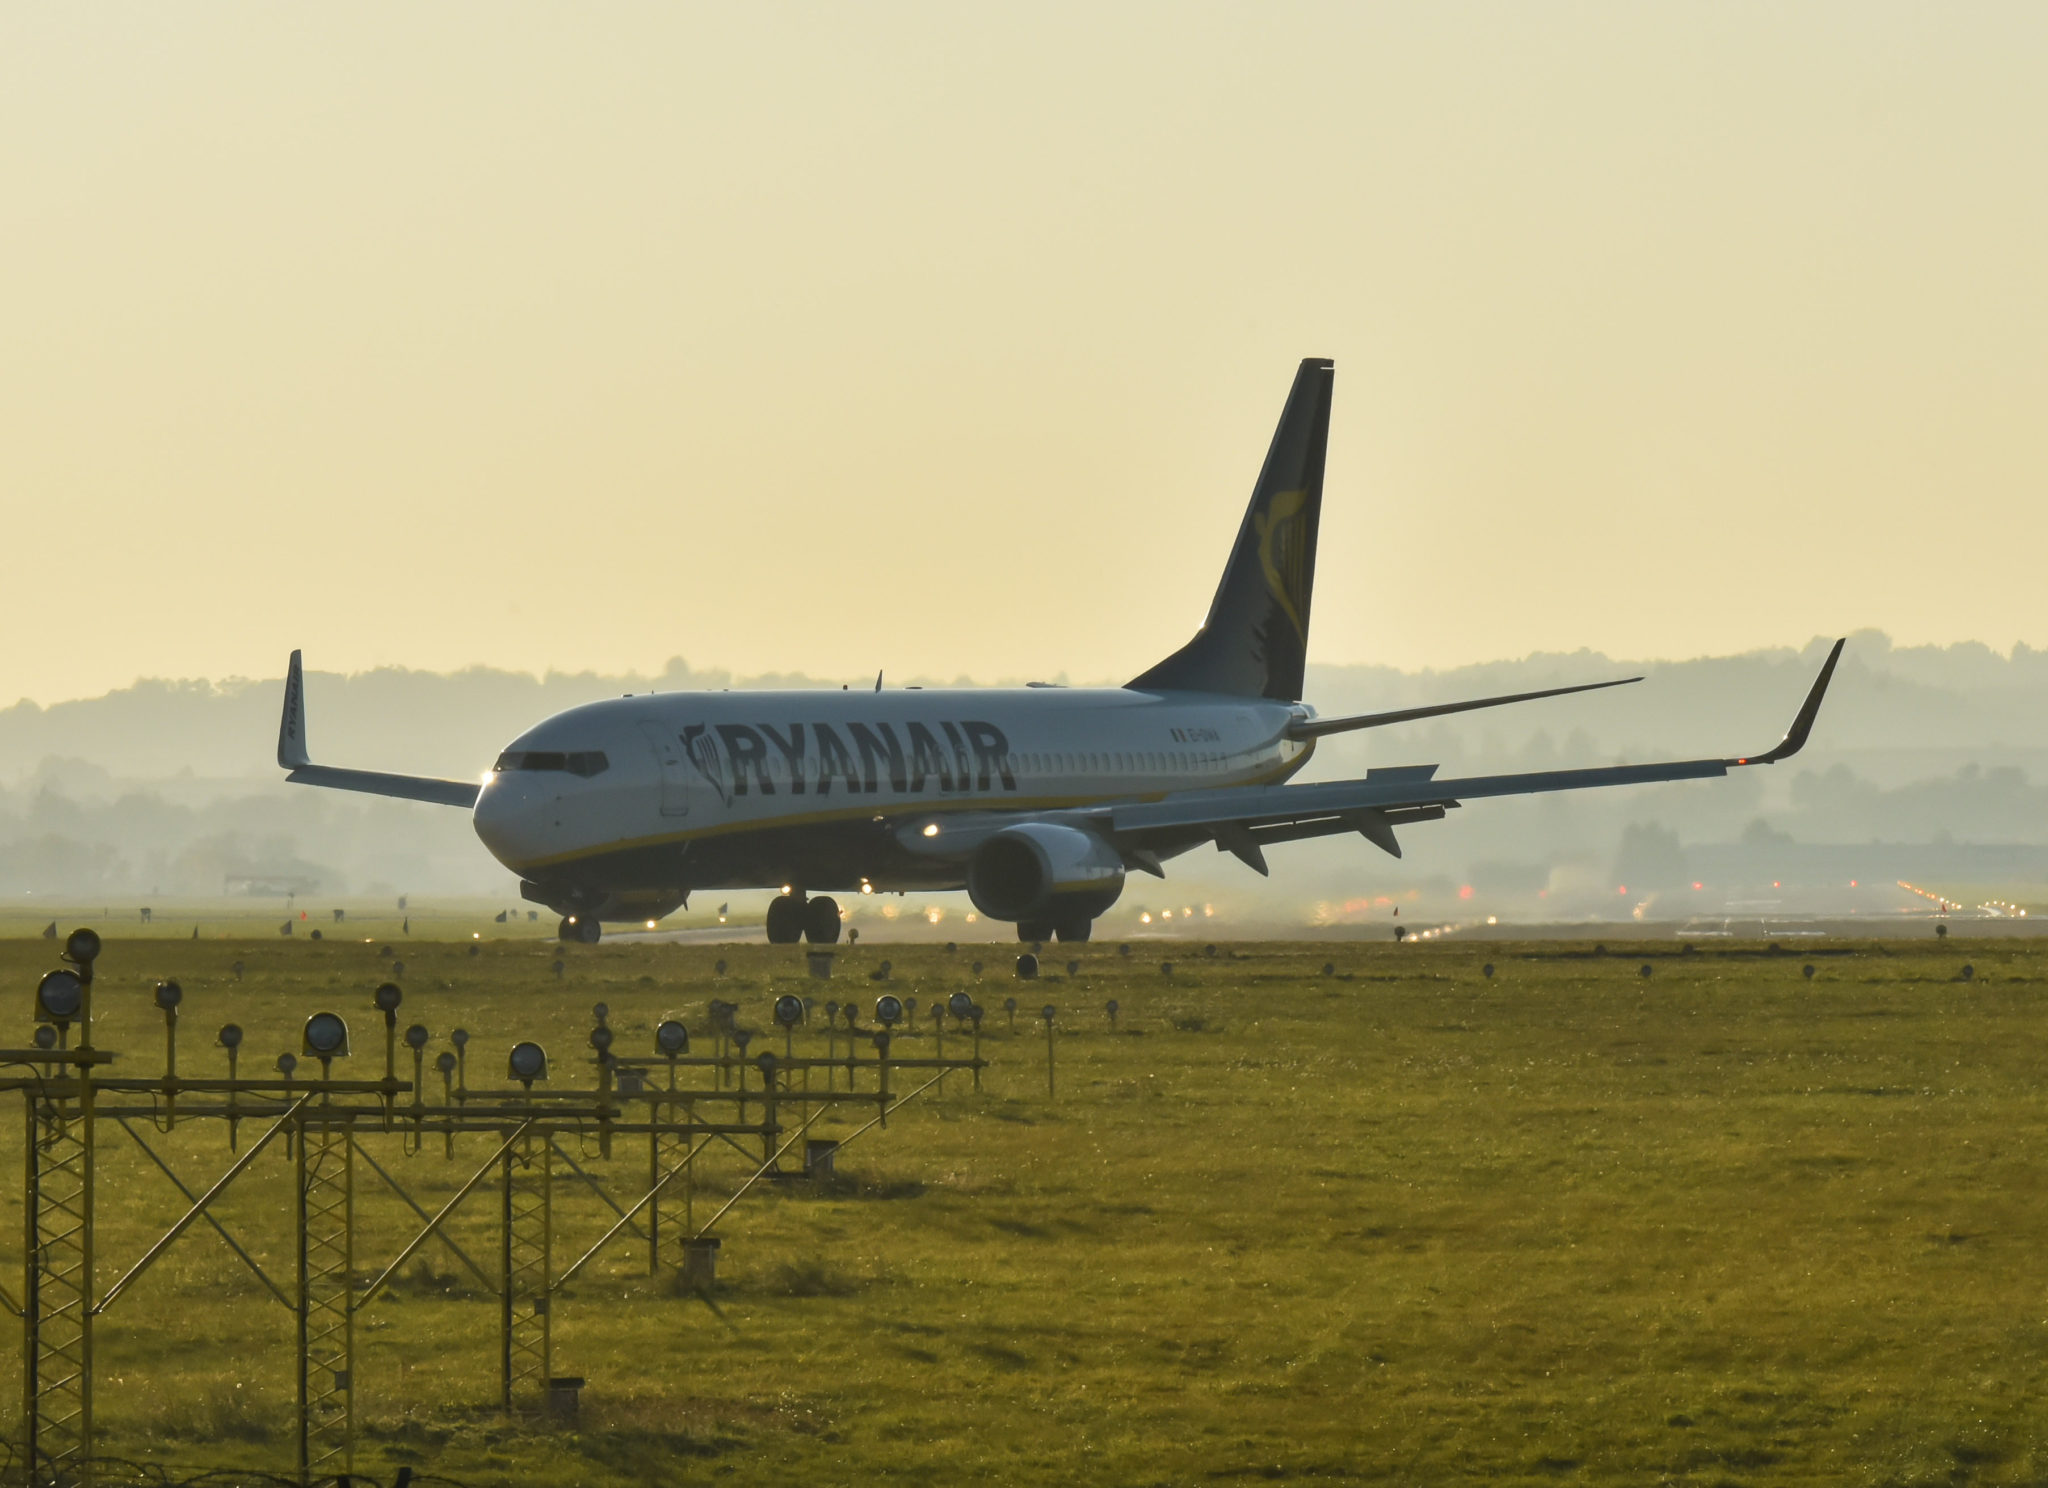 A Ryanair plane landing at an airport